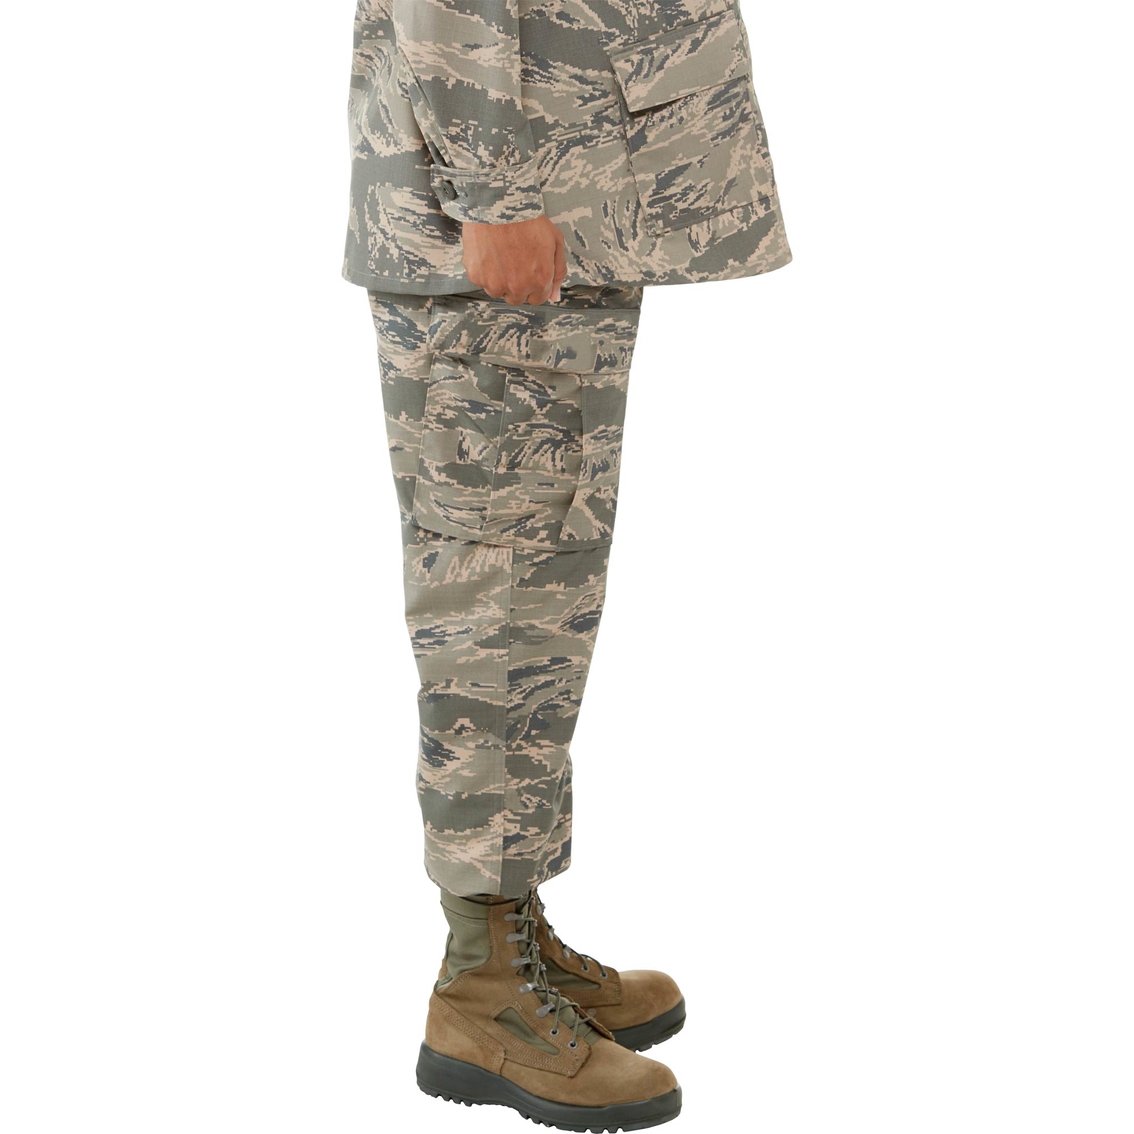 DLATS Air Force Maternity Airman Battle Uniform (MABU) Slacks - Image 3 of 5